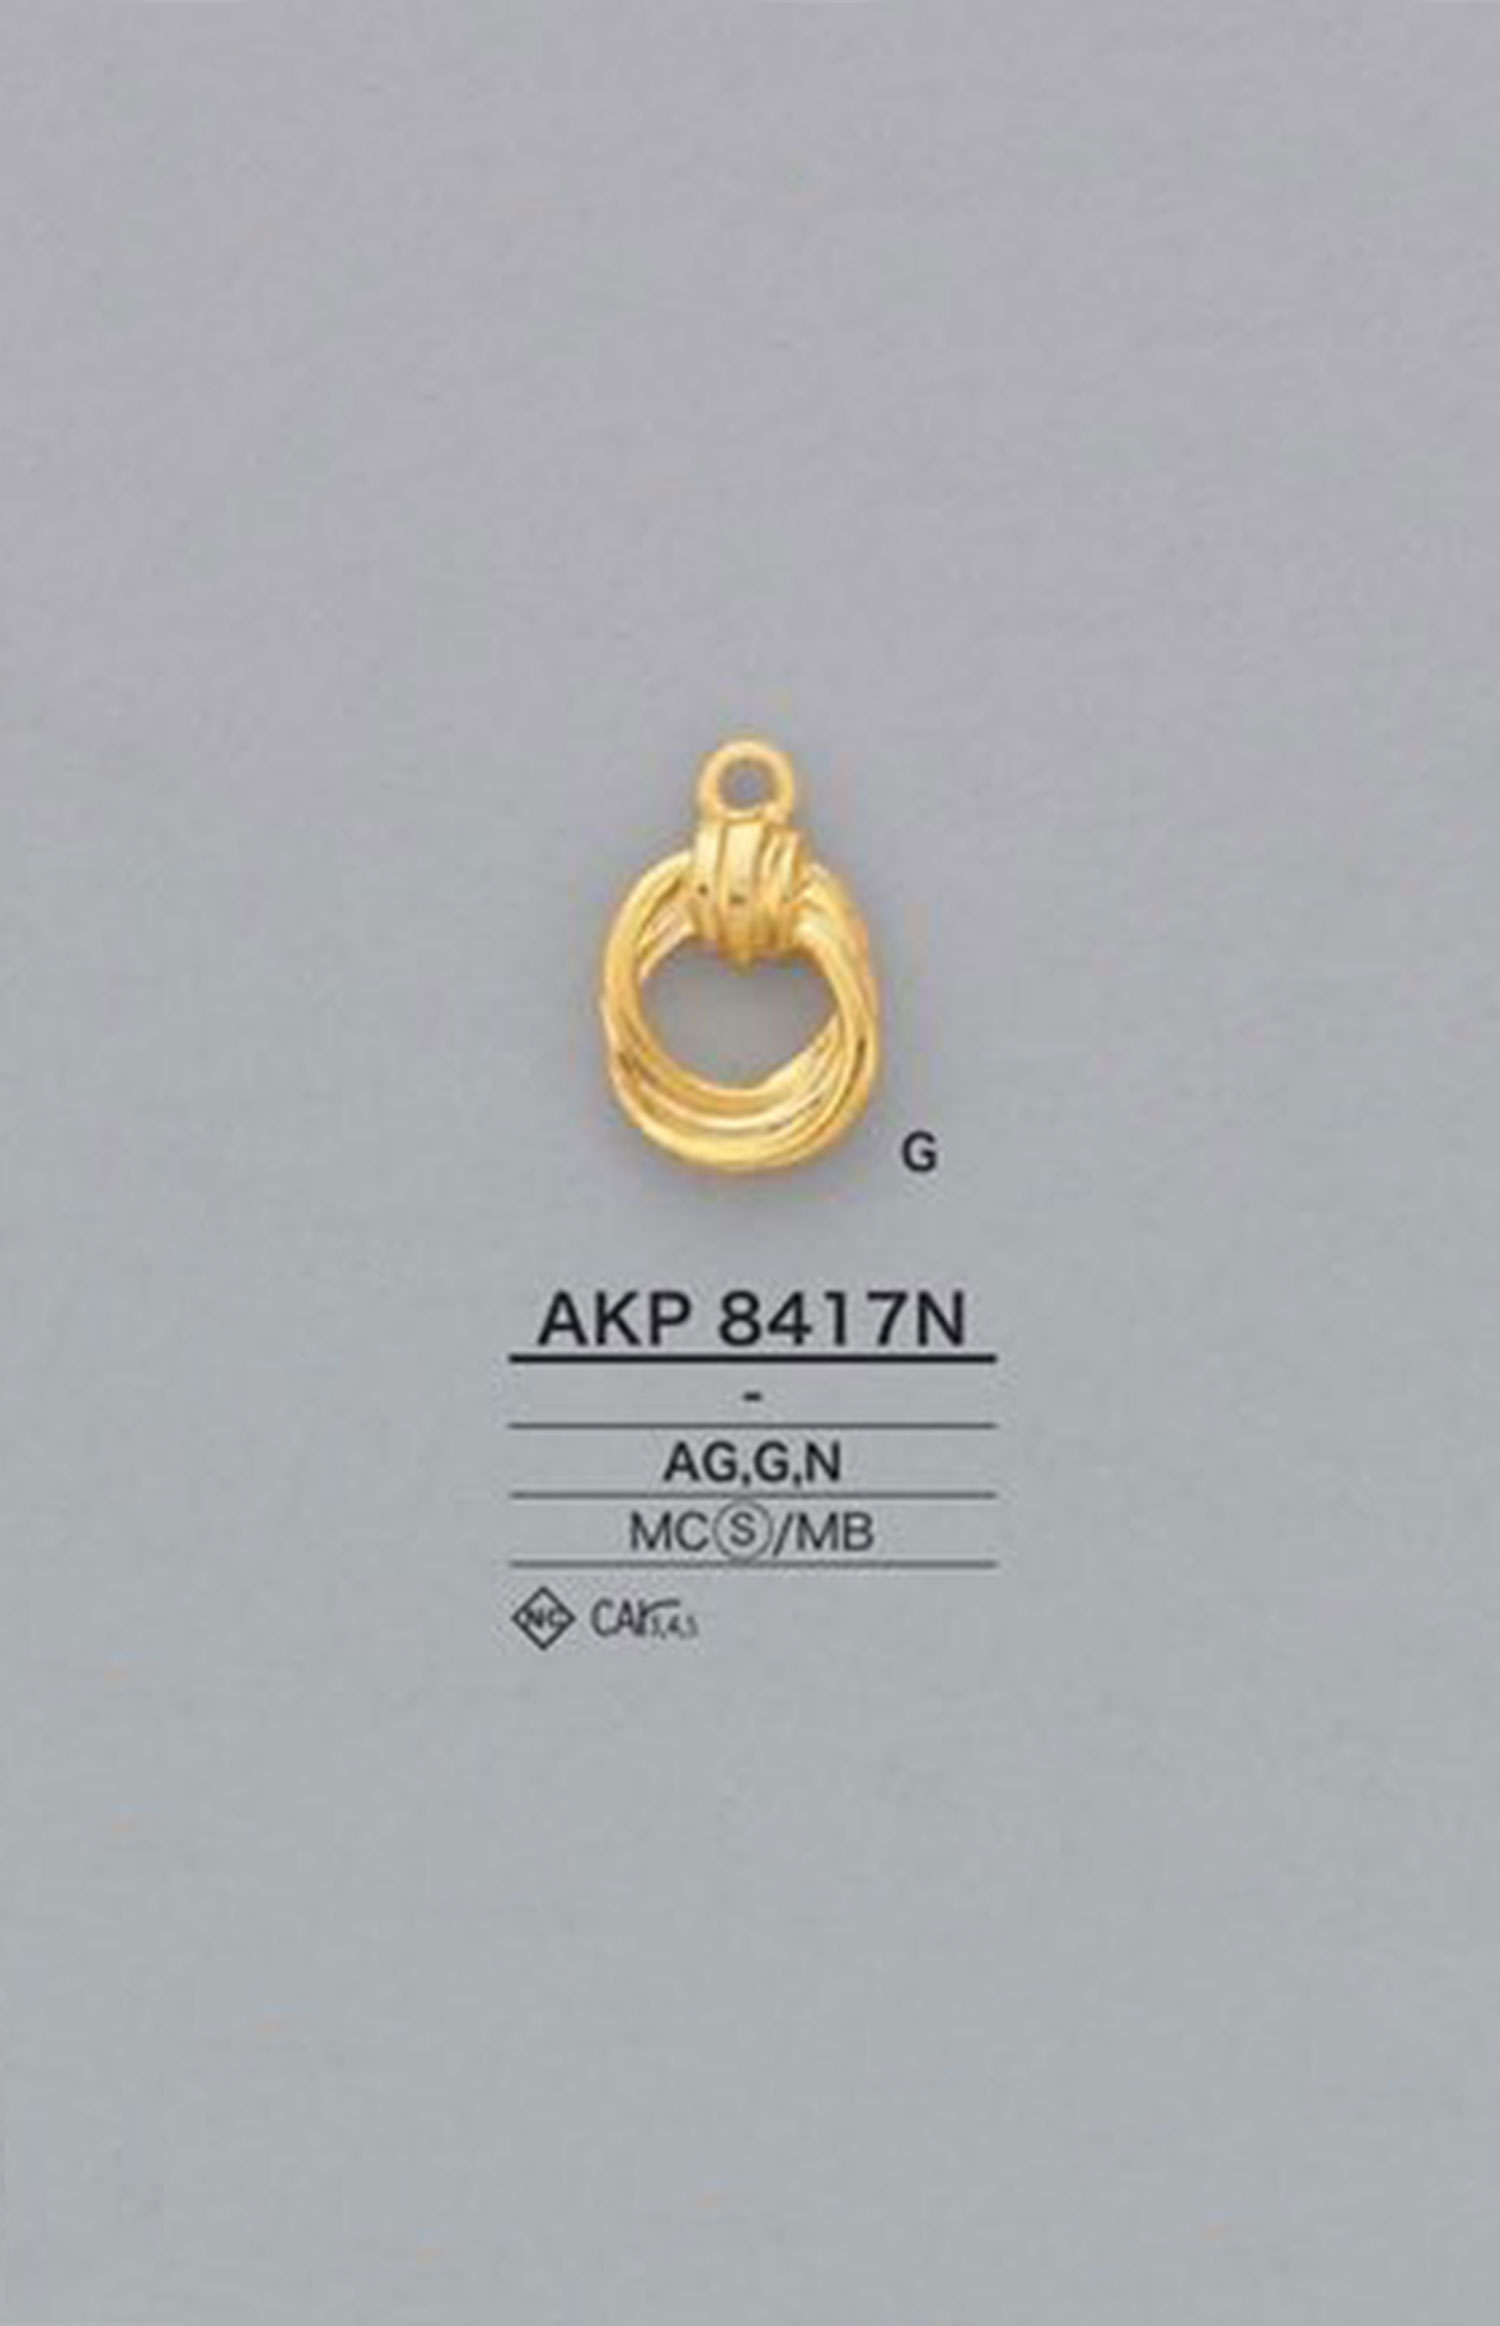 AKP8417N Ringreißverschlusspunkt (Zuglasche)[Reißverschluss] IRIS